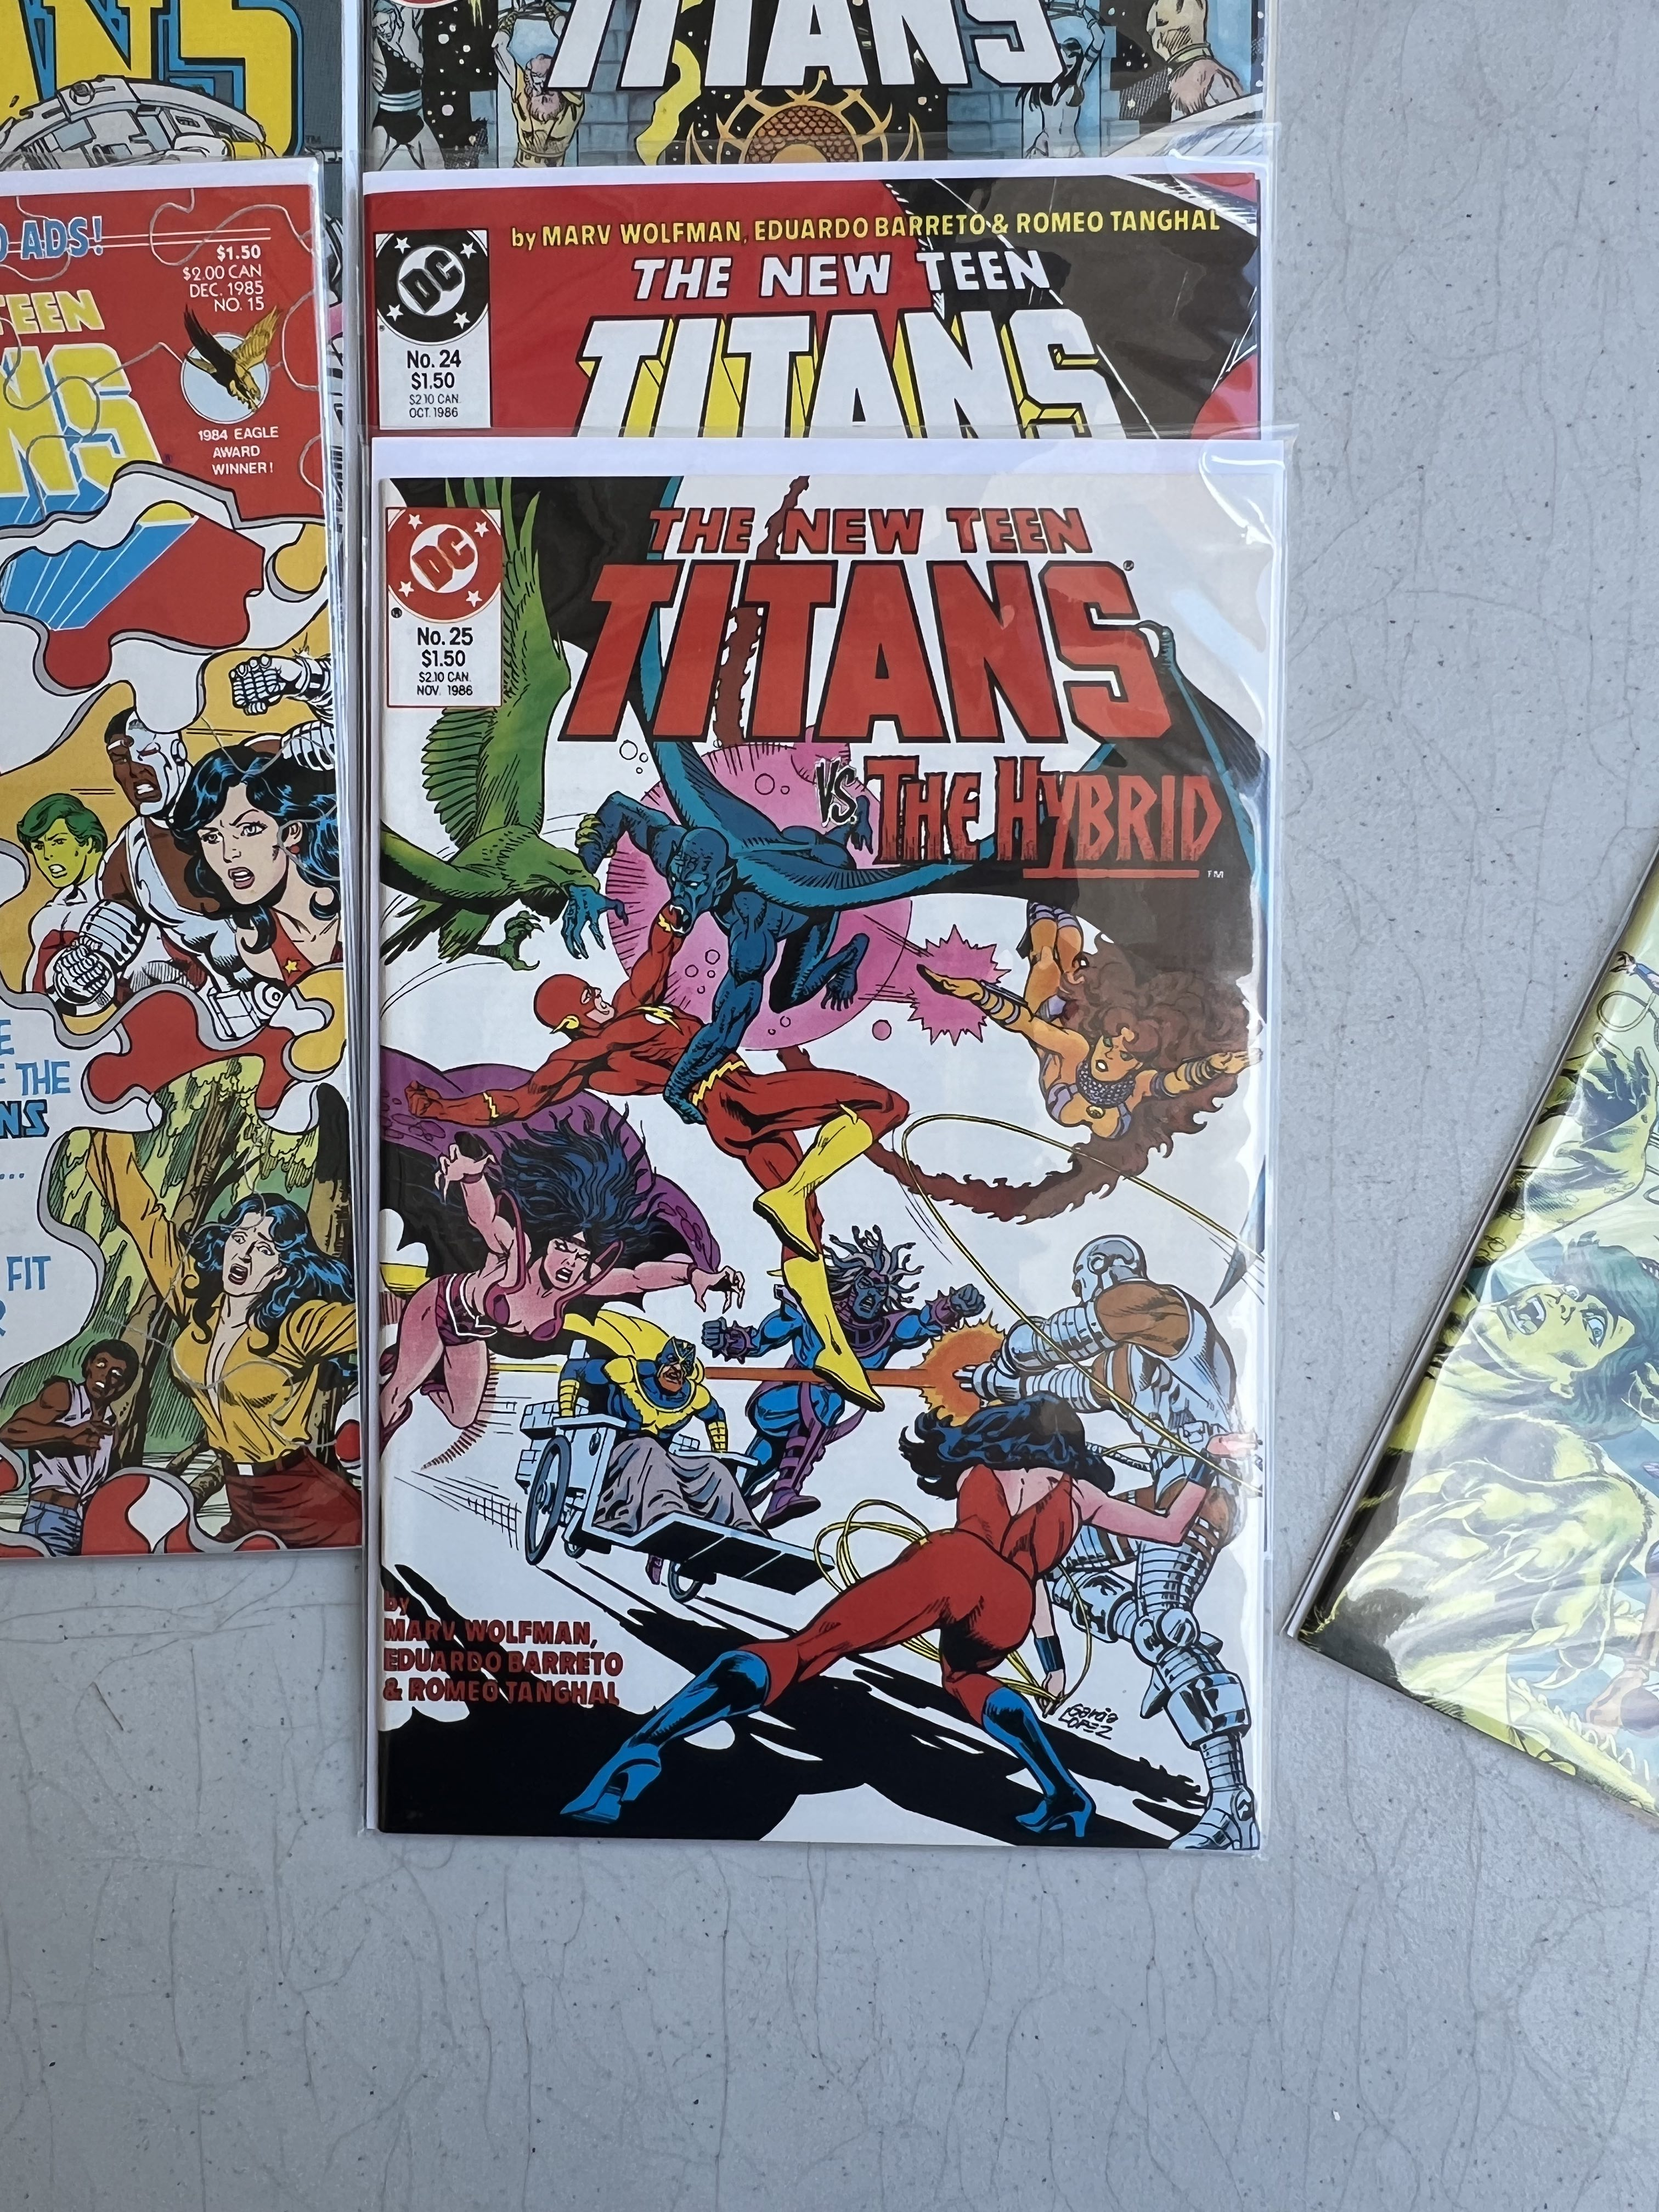 Comic Book Titans DC collection lot 21